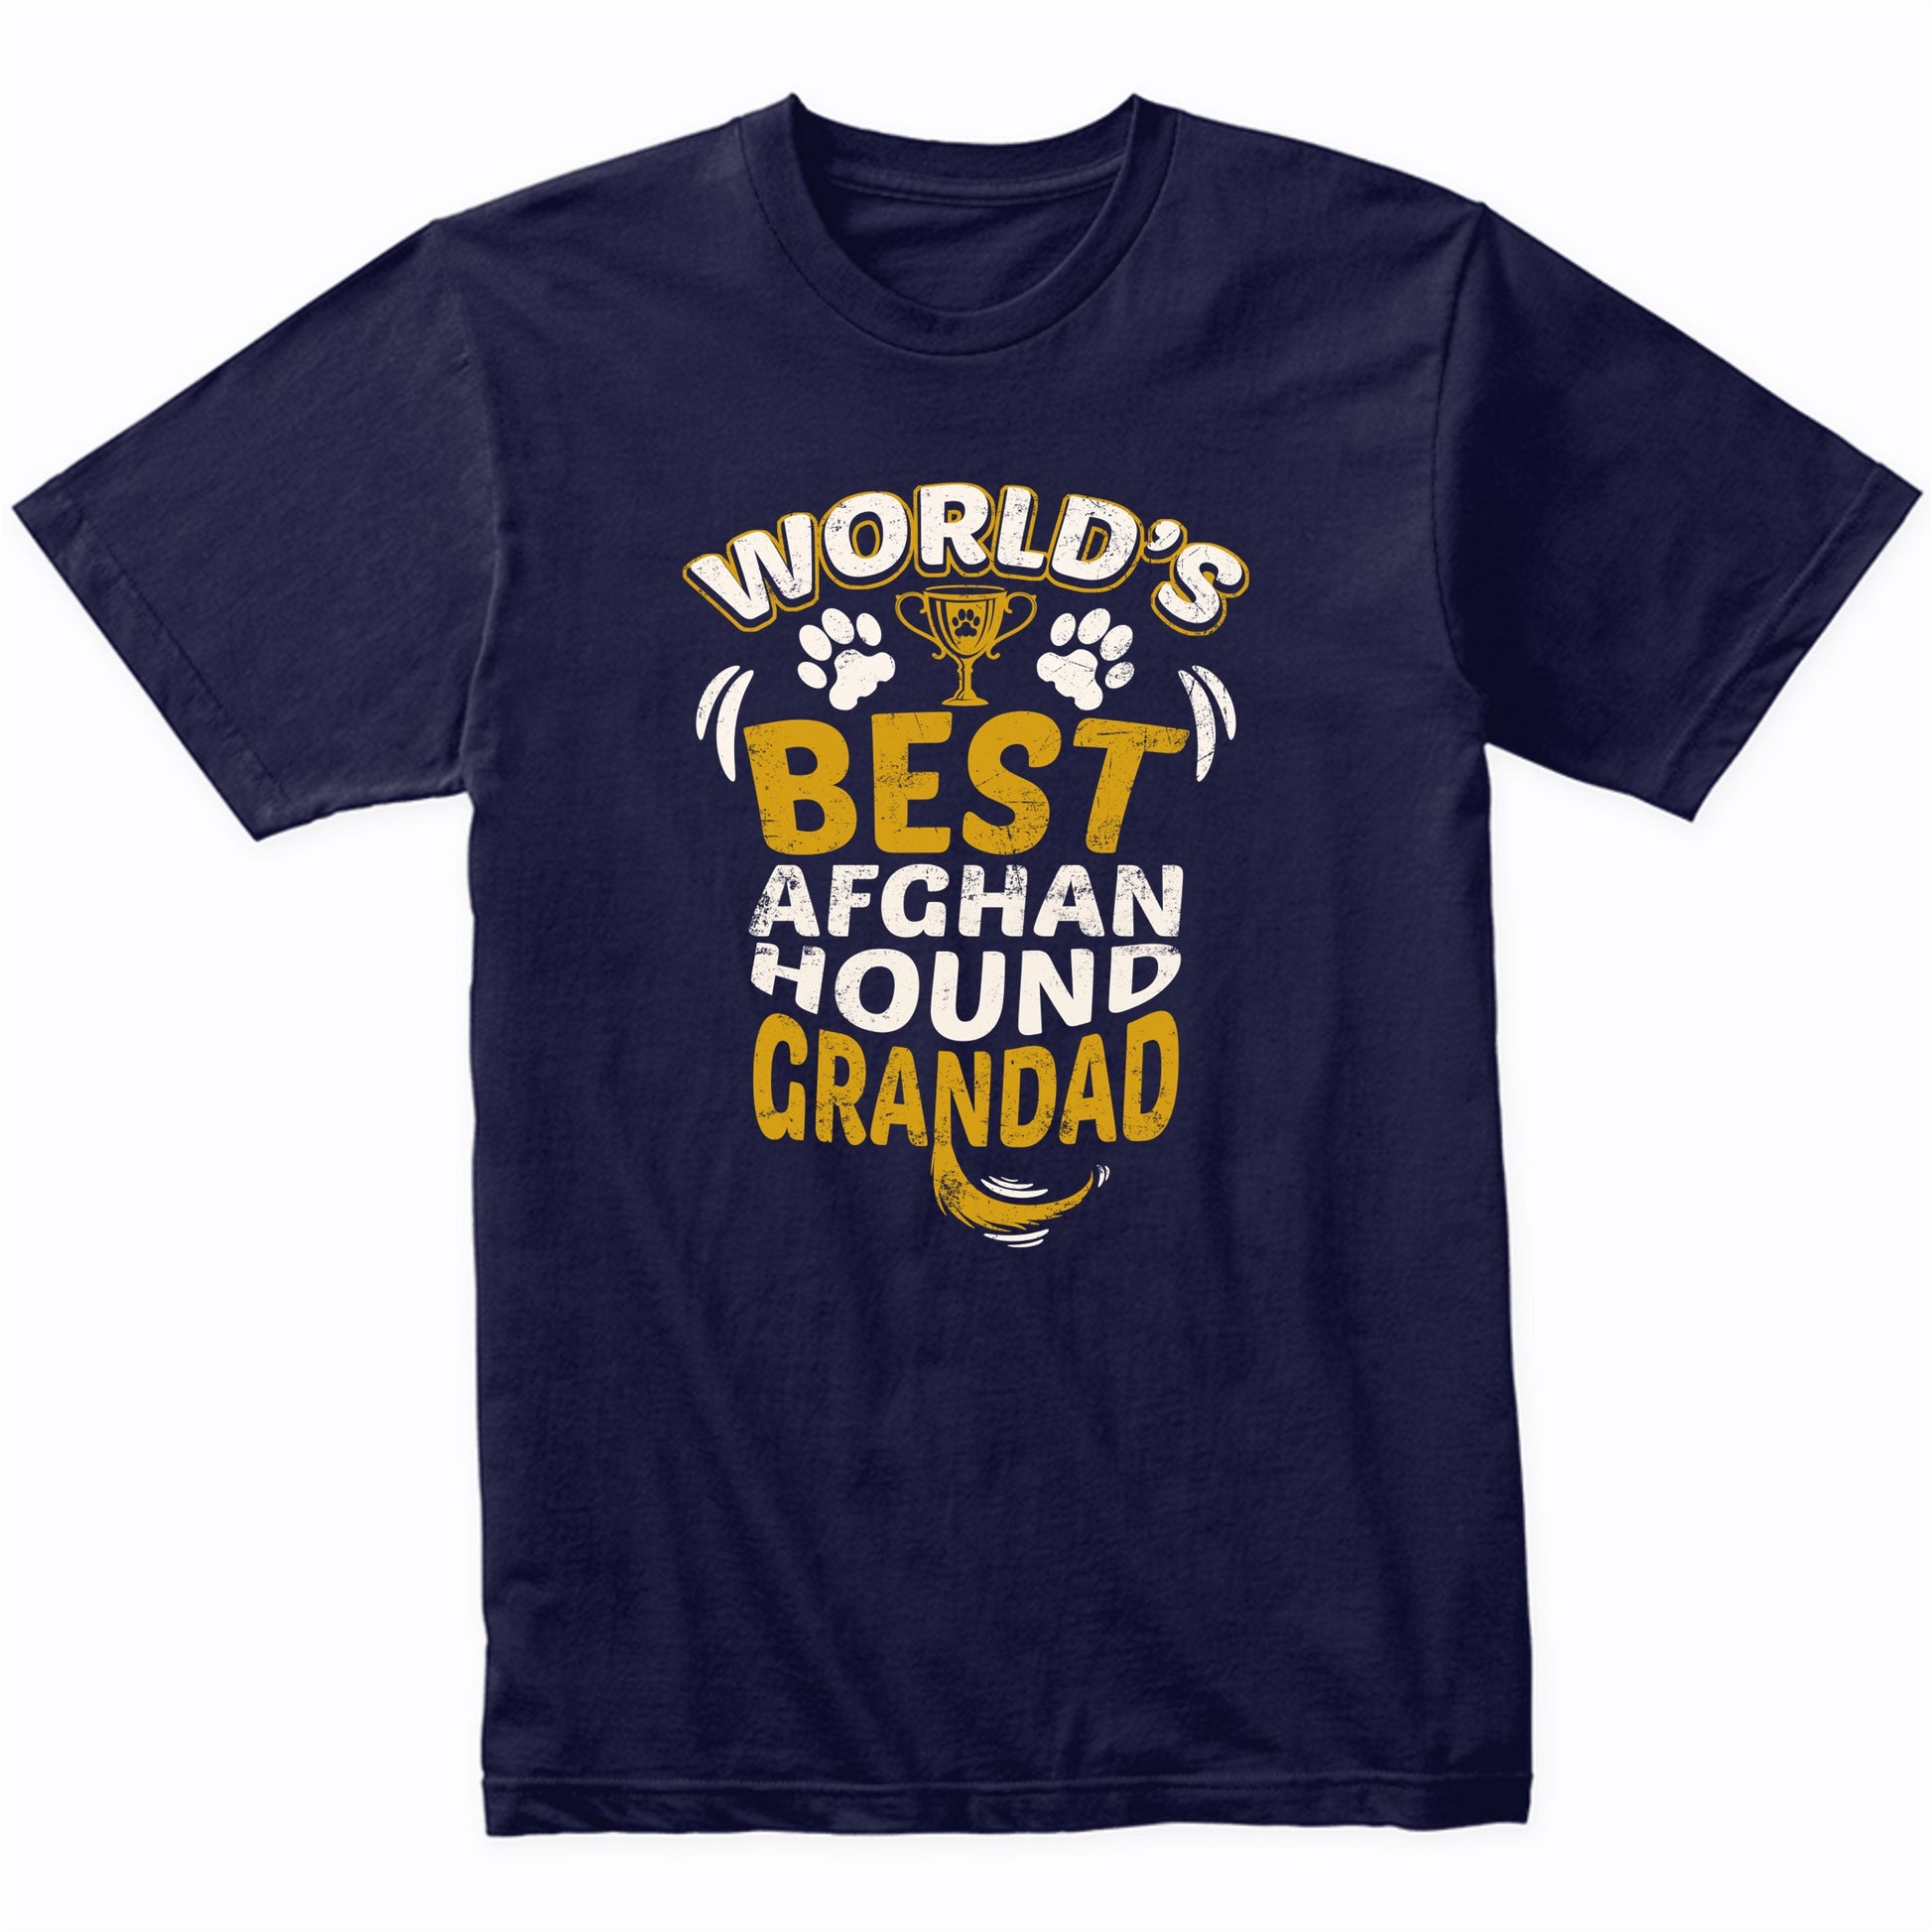 World's Best Afghan Hound Grandad Graphic T-Shirt